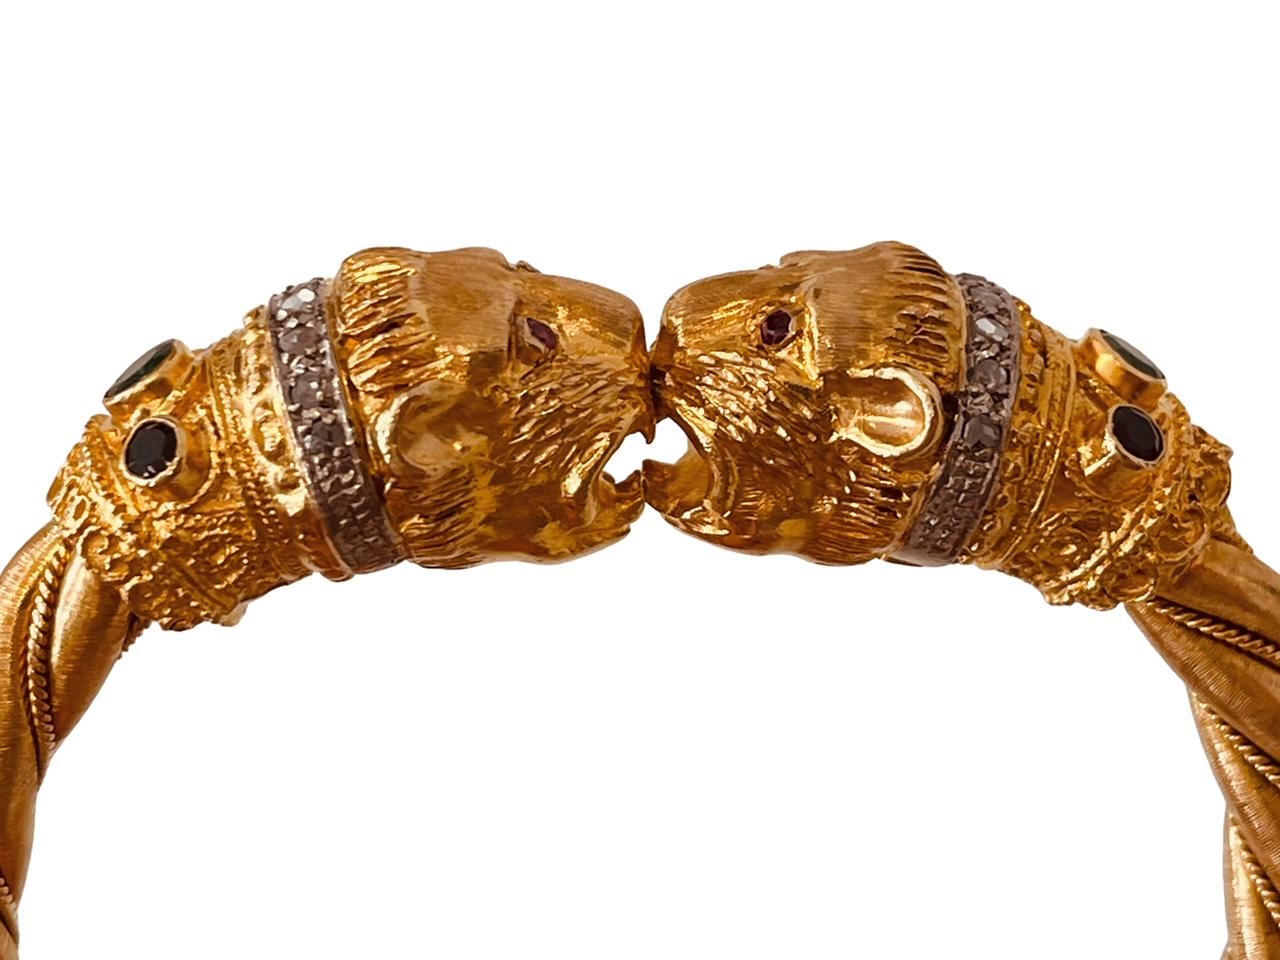 18ct gold mens bracelet sale